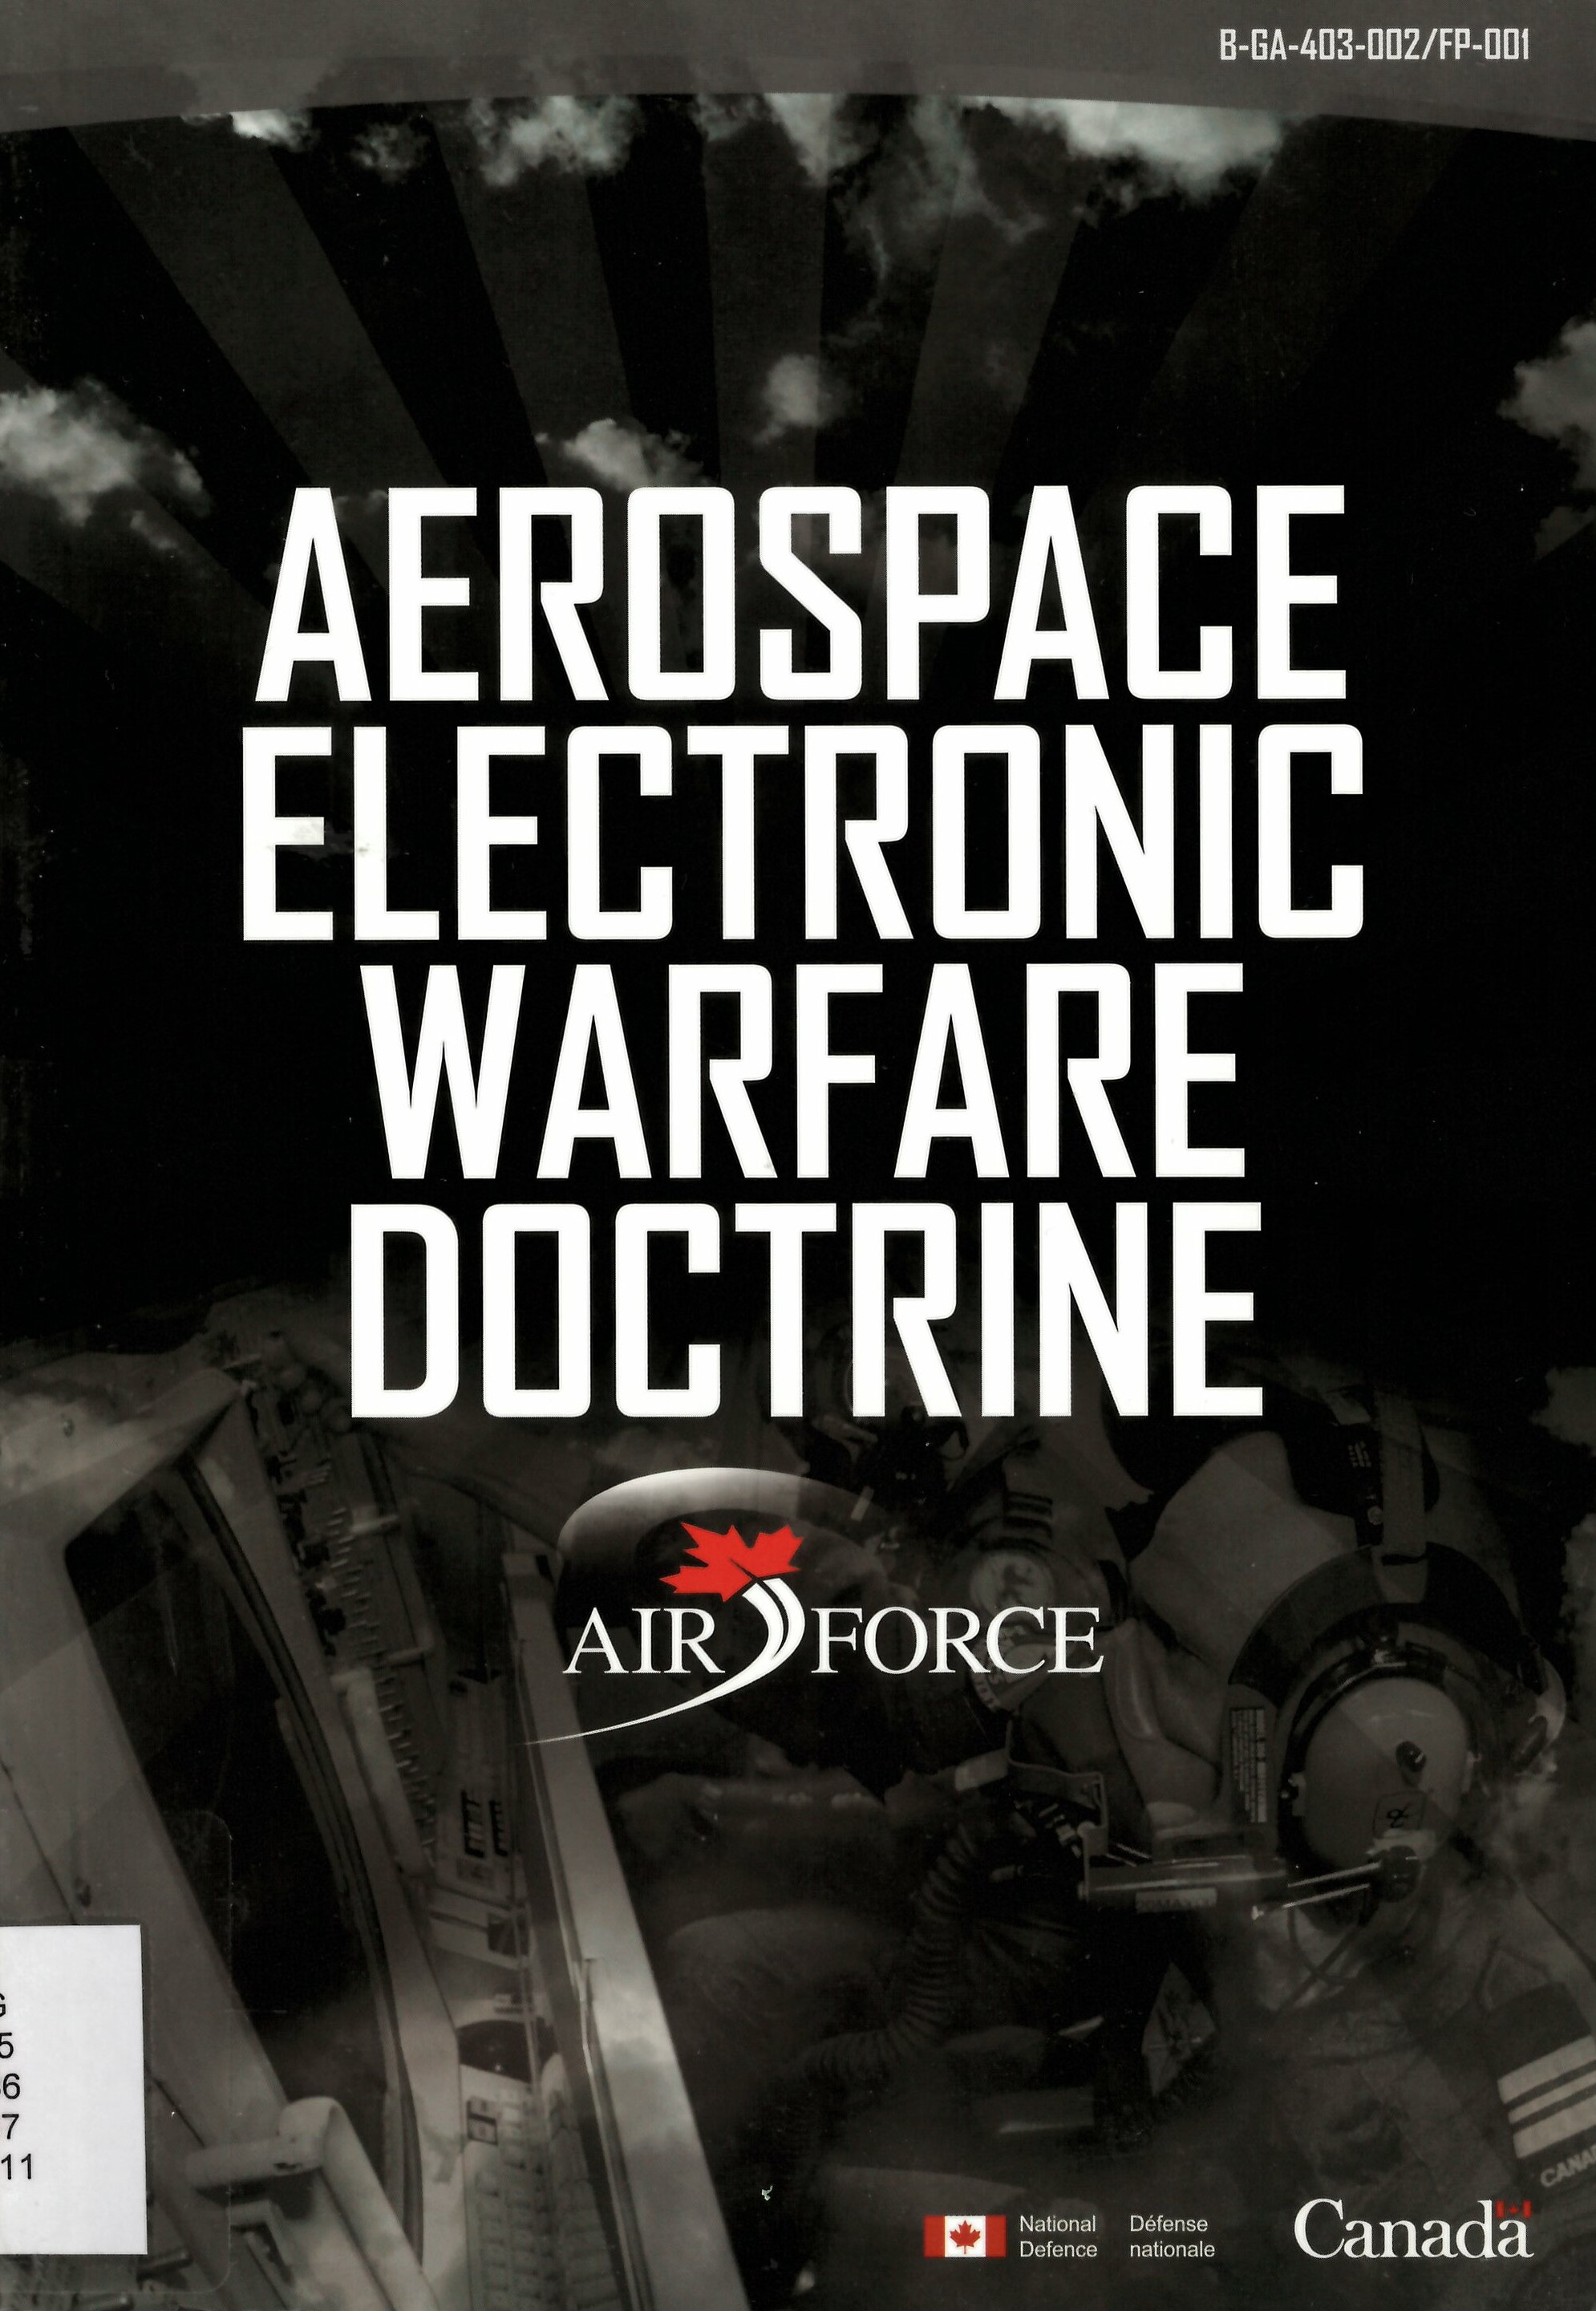 Aerospace electronic warfare doctrine